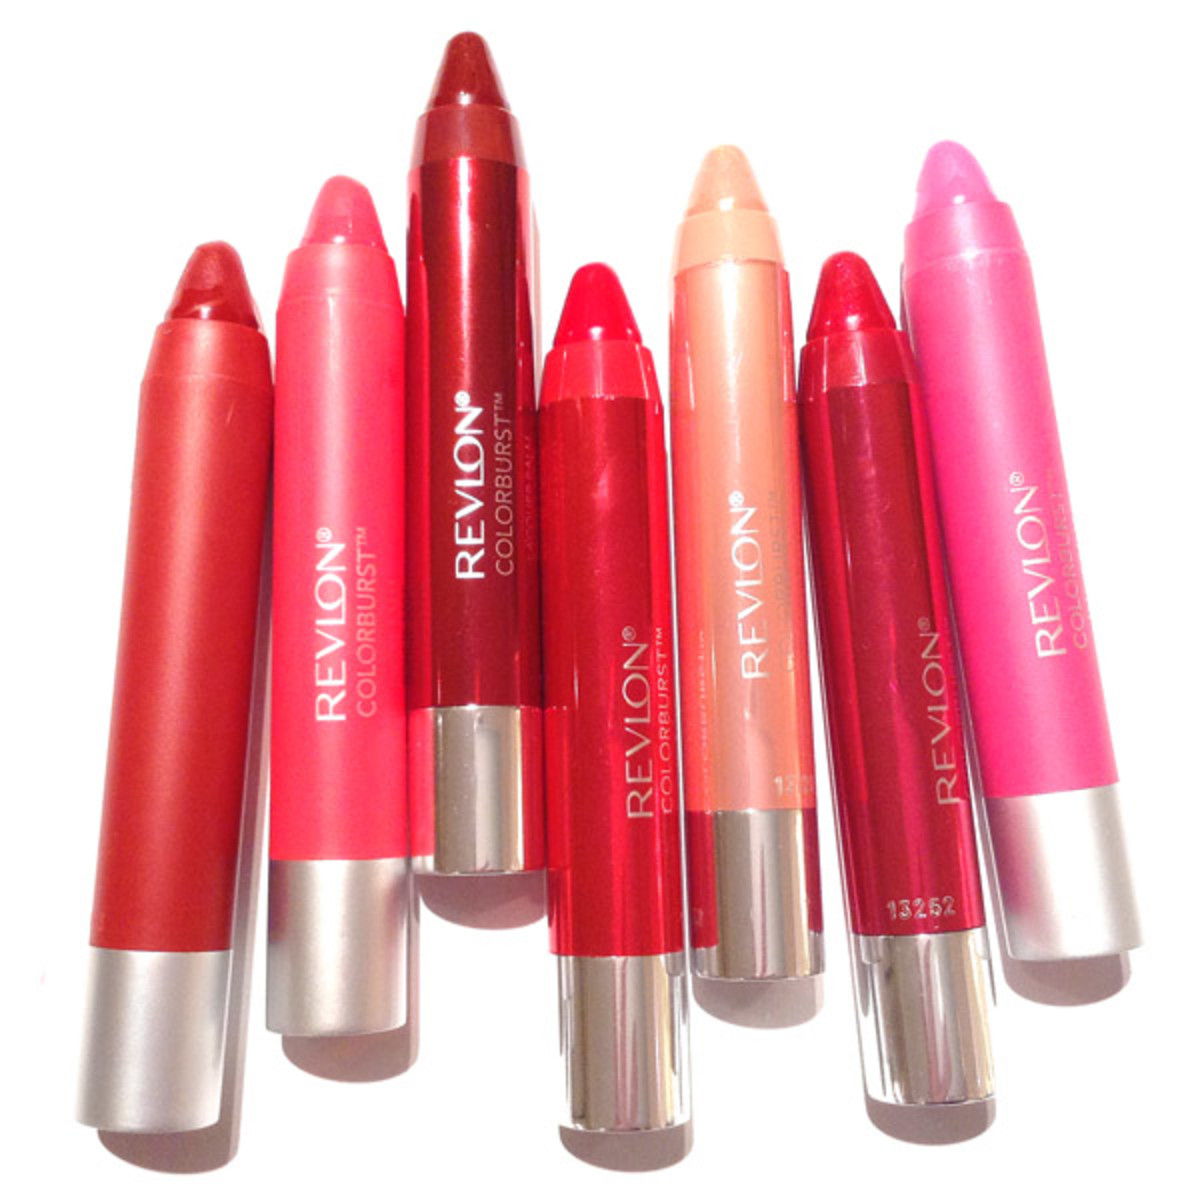 Revlon ColorBurst Balms Are the Best Drugstore Lip Crayons